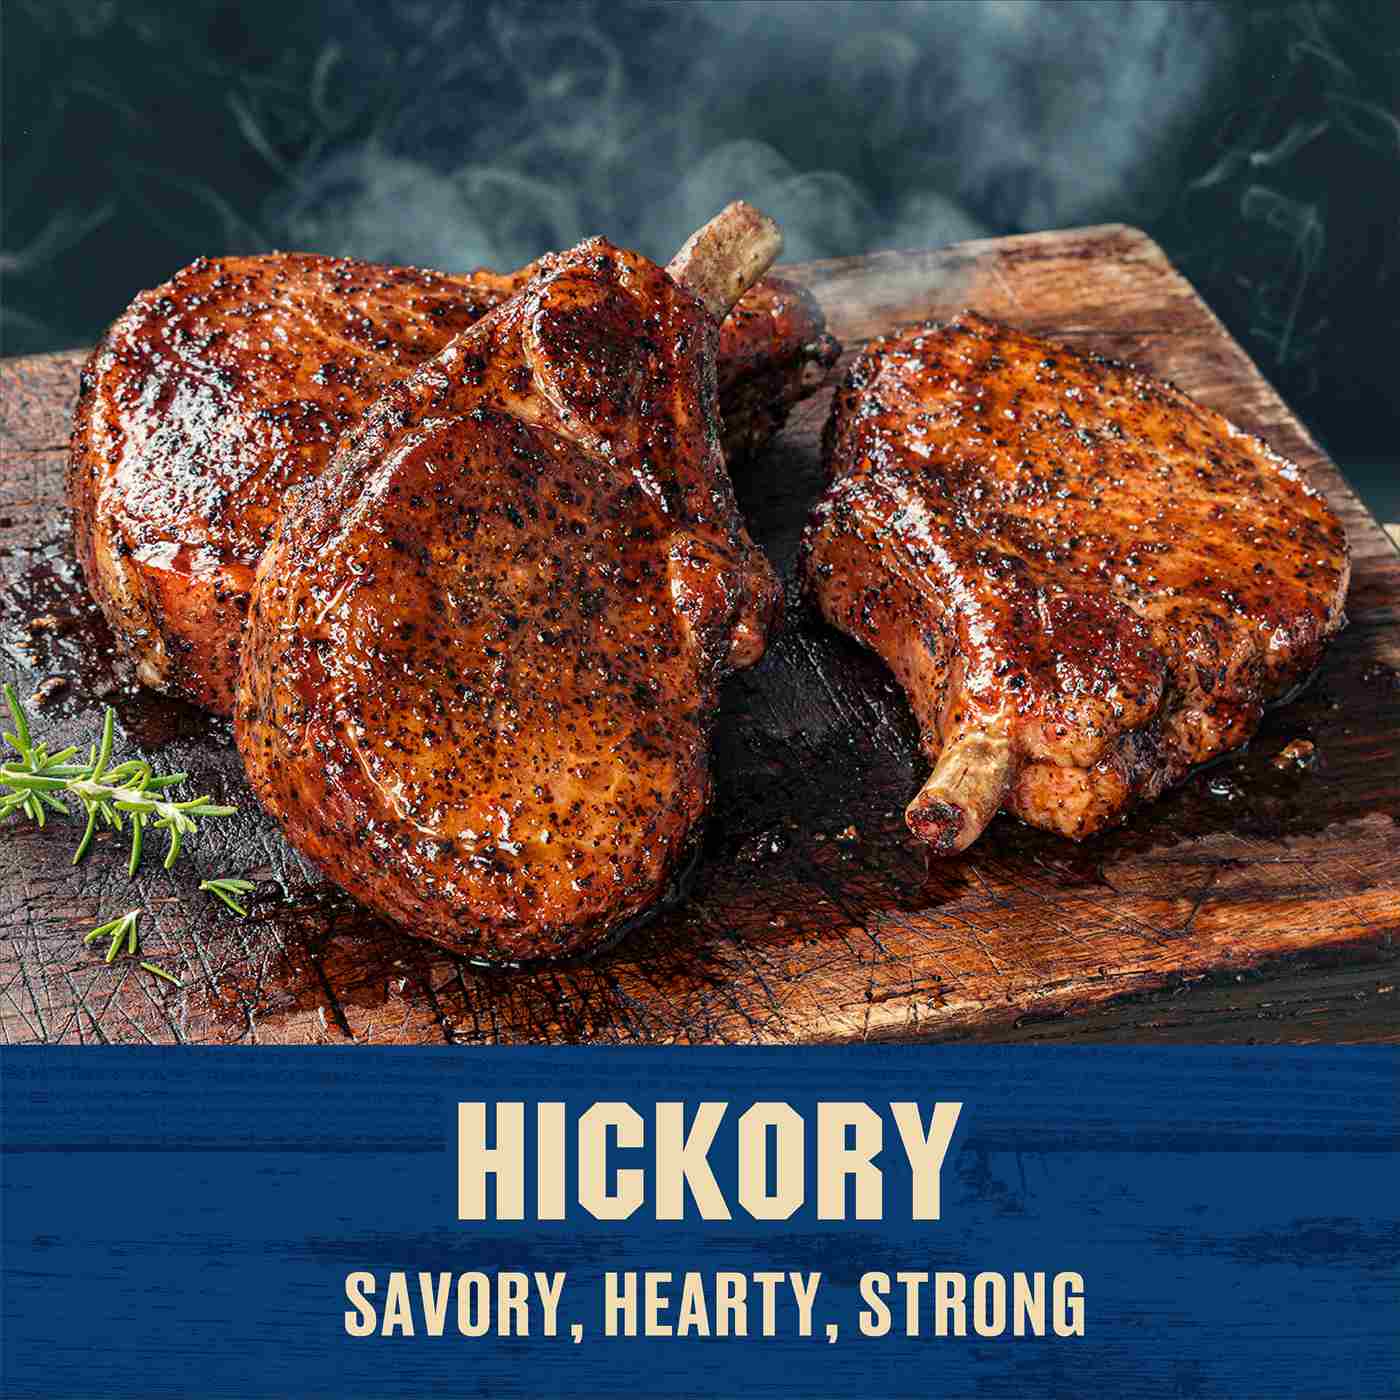 Kingsford 100% Hickory Wood Pellets, BBQ Pellets for Grilling; image 2 of 7